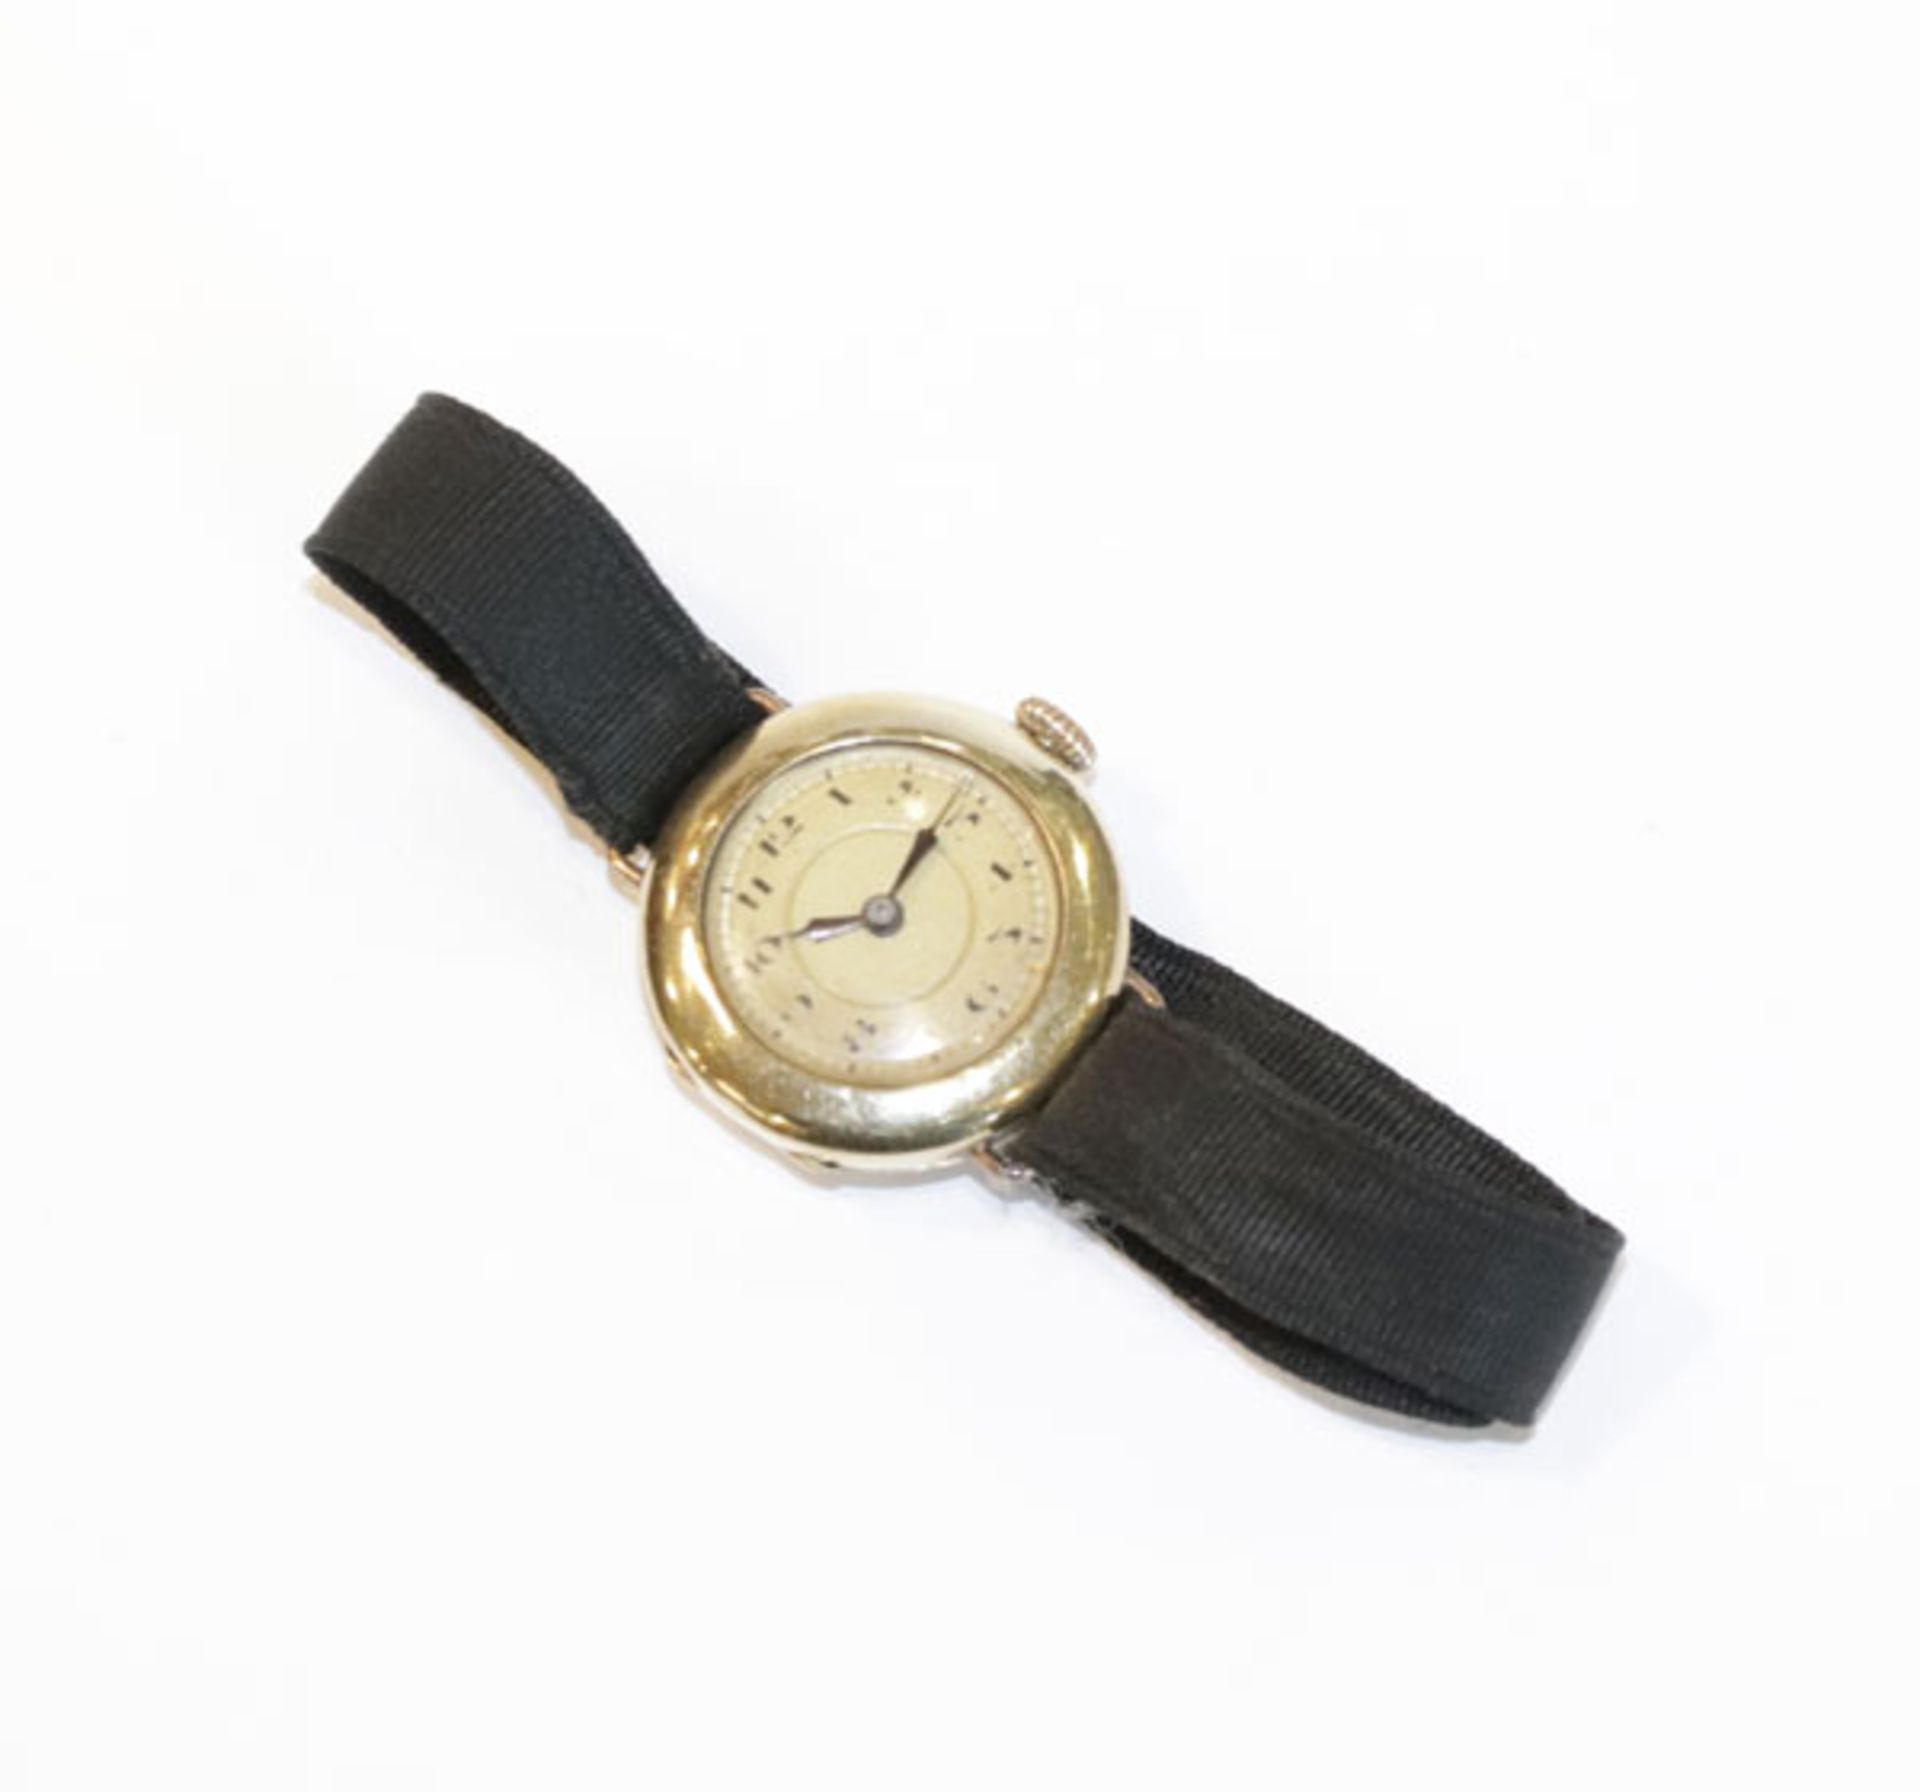 14 k Gelbgold Damen Armbanduhr um 1910, intakt, an schwarzem Stoffband